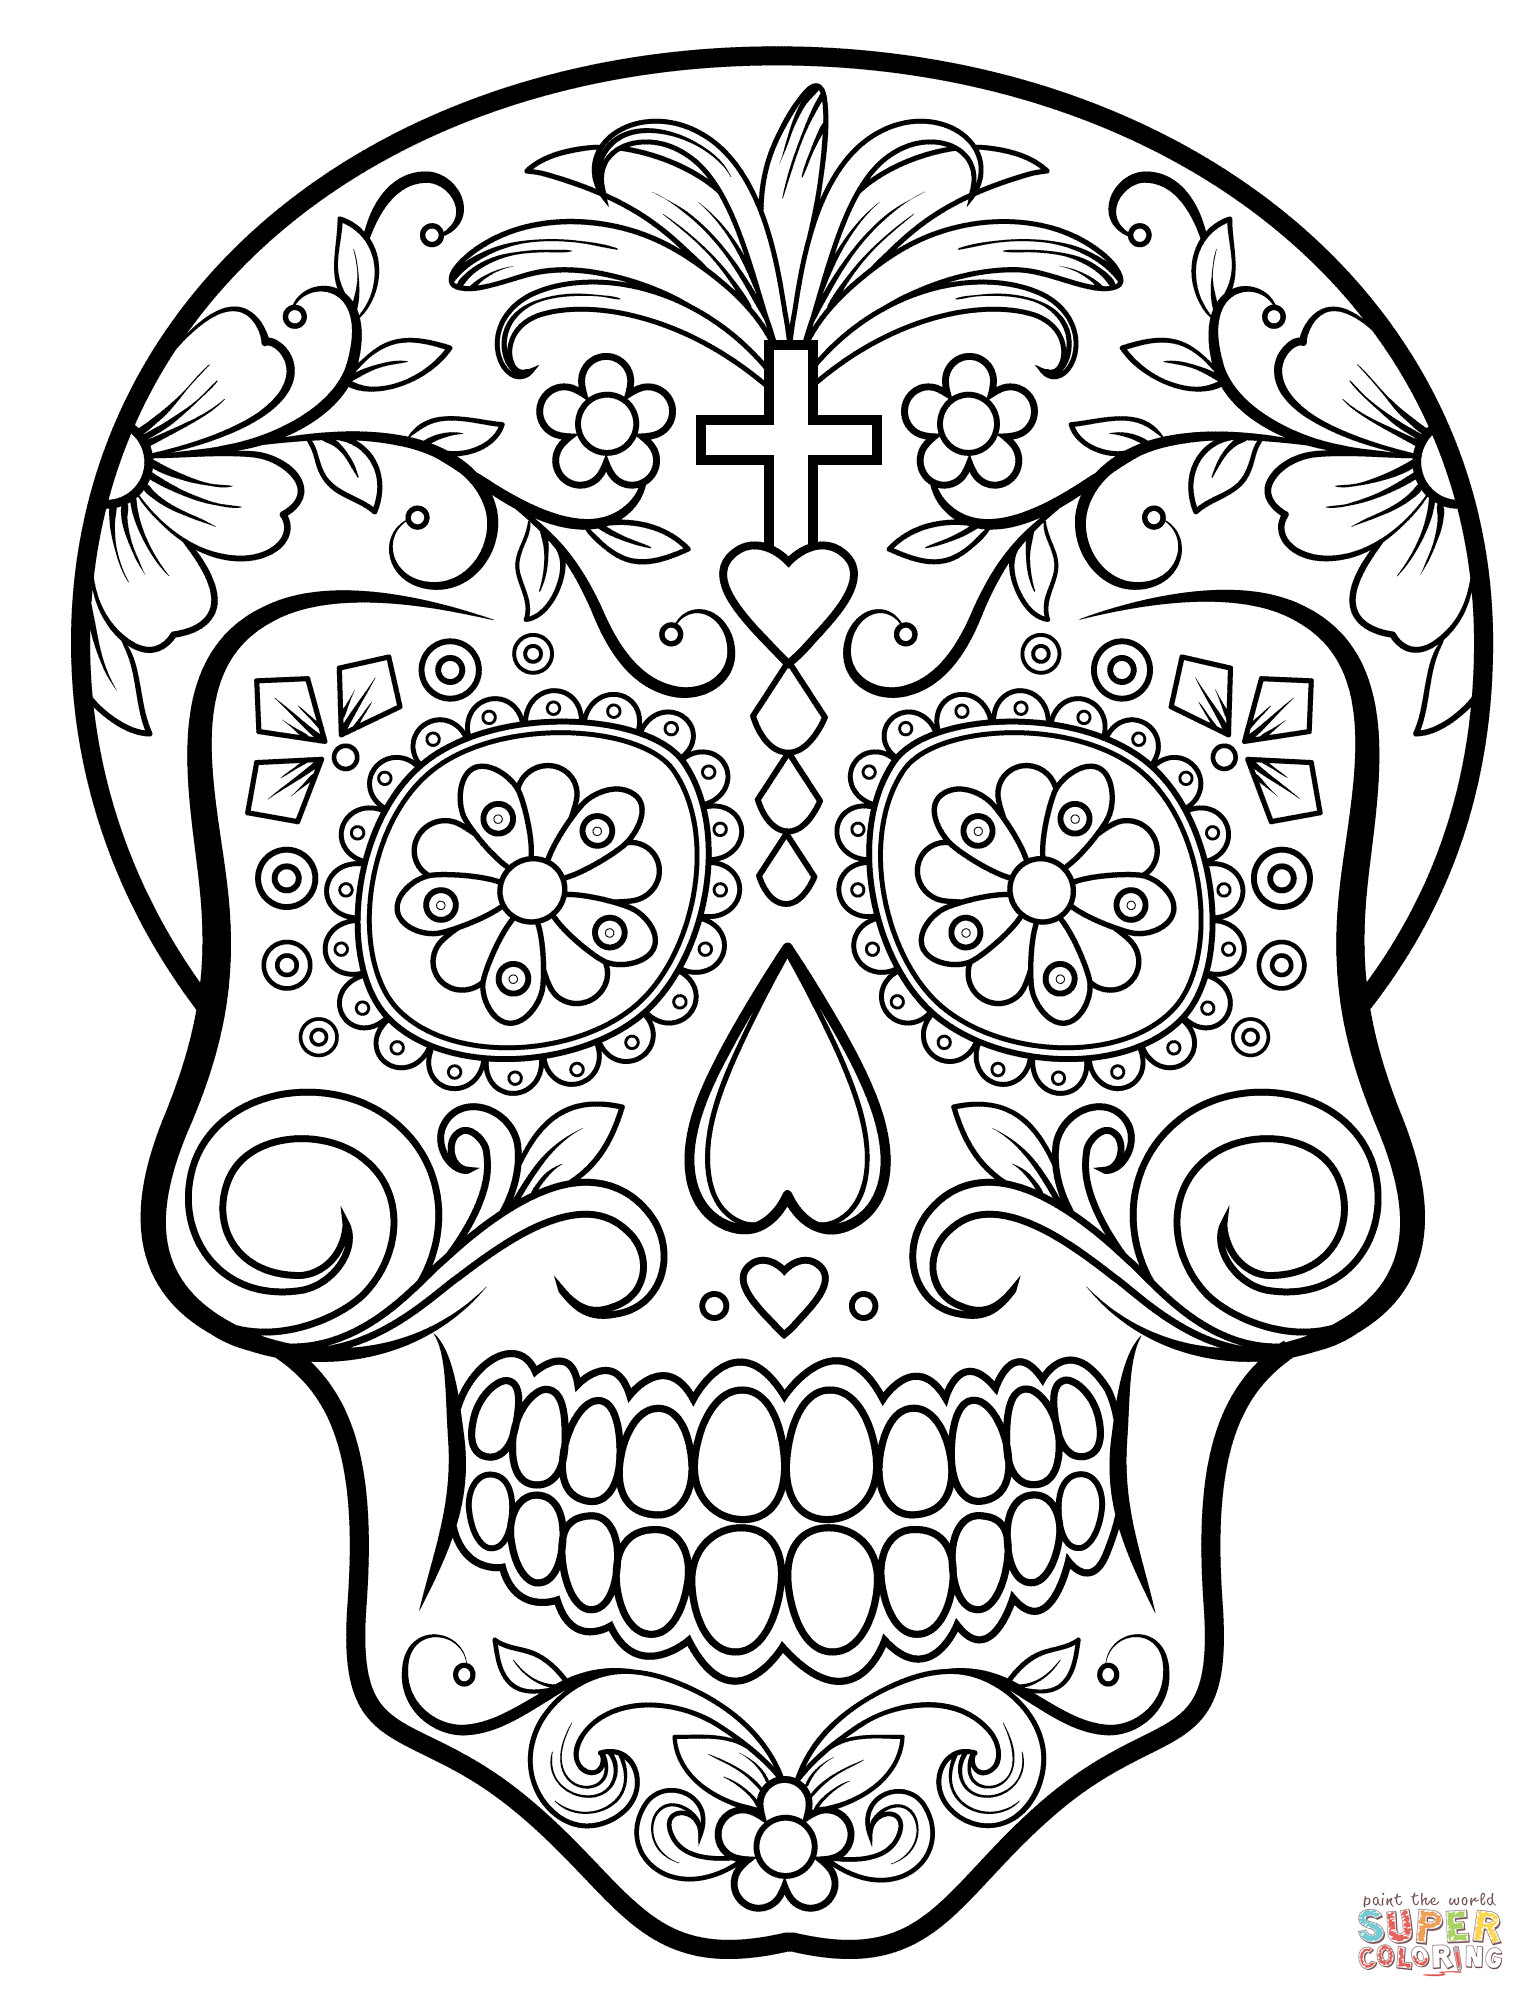 Printable Sugar Skull Coloring Pages
 Sugar Skull Coloring Pages Bestofcoloring